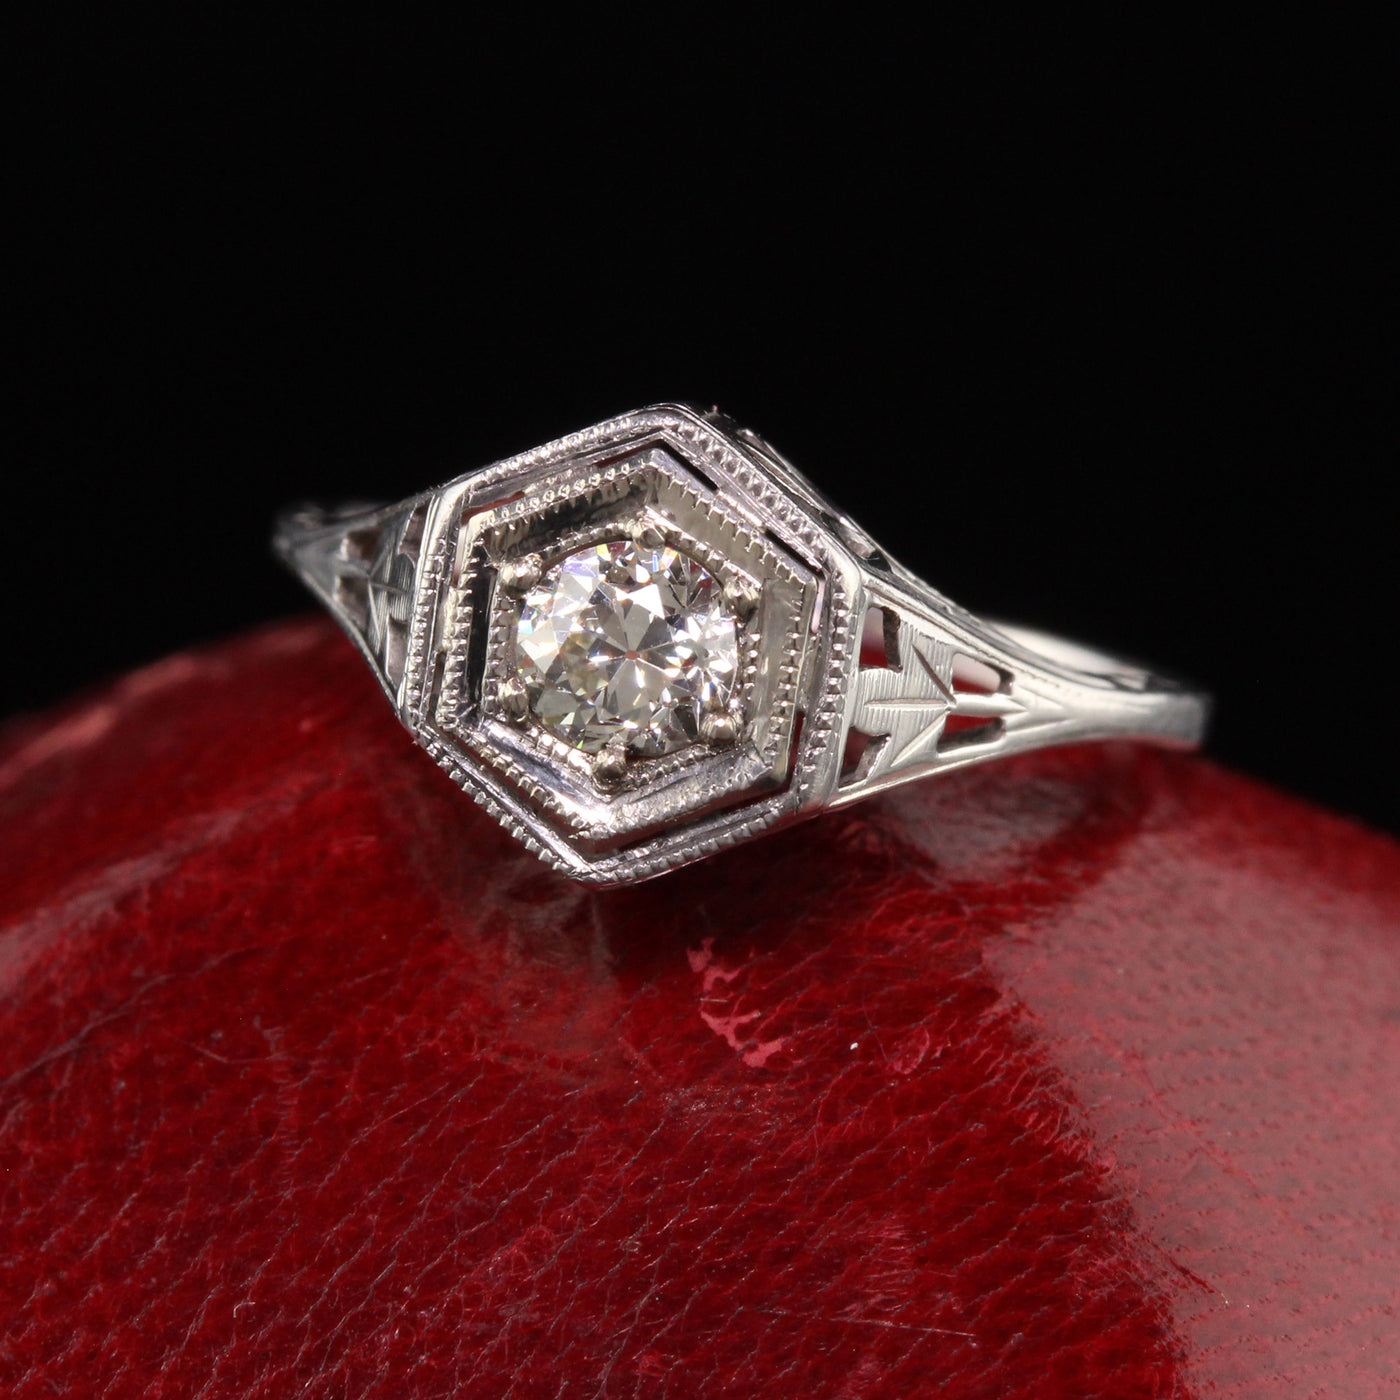 Antique Art Deco 14K White Gold Old European Cut Diamond Engagement Ring